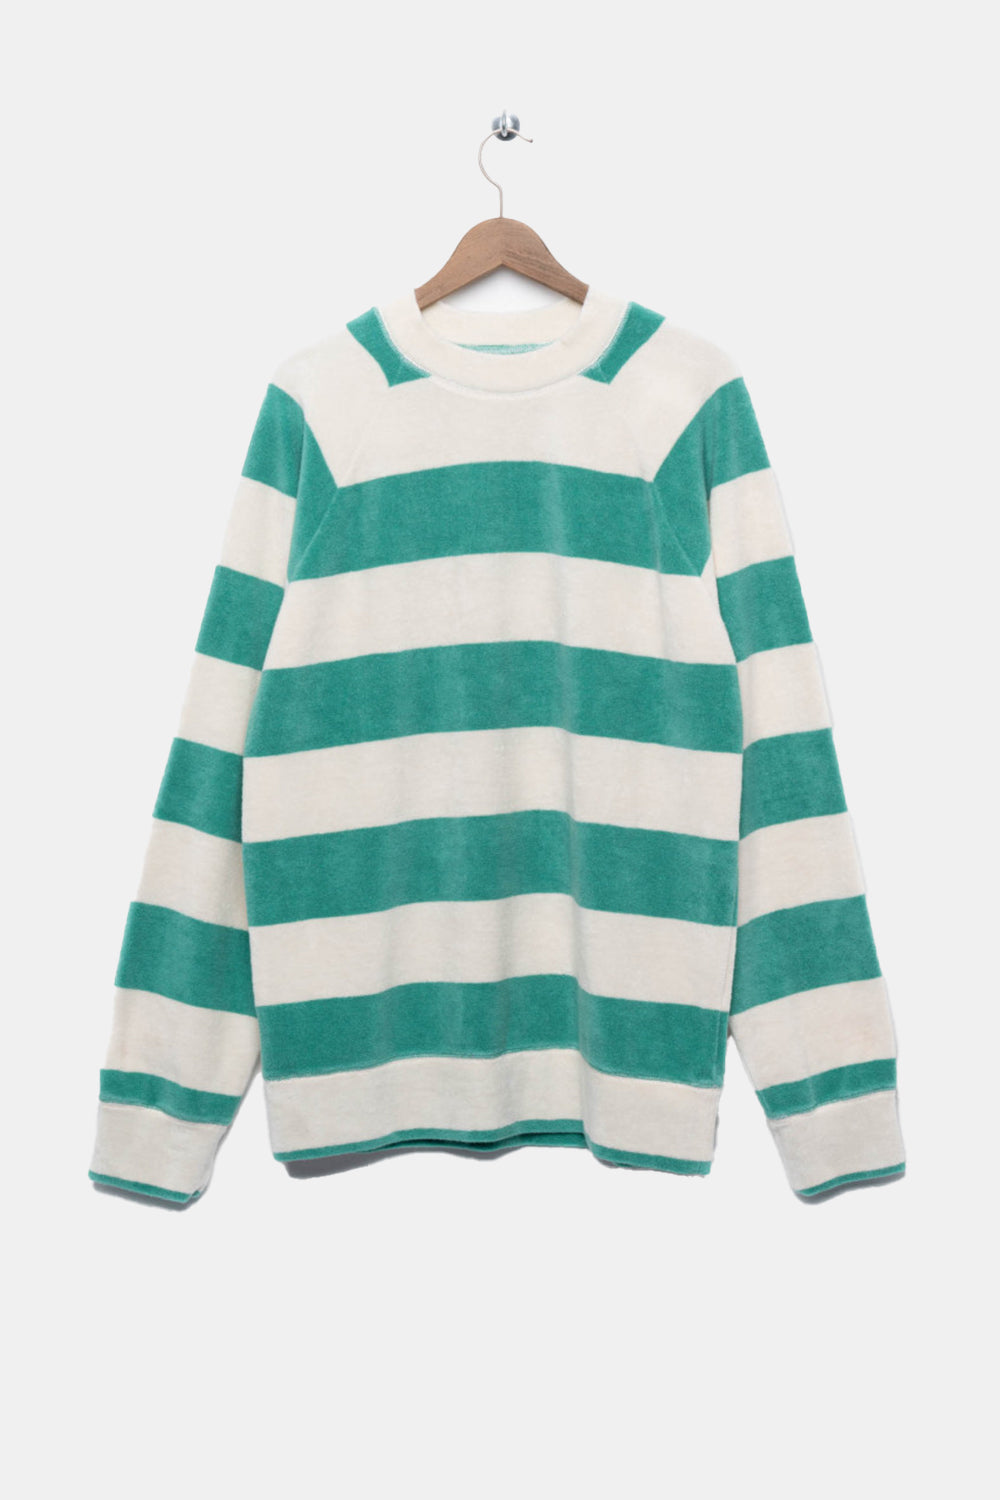 La Paz Cunha Sweatshirt (Gumdrop Green Stripes)